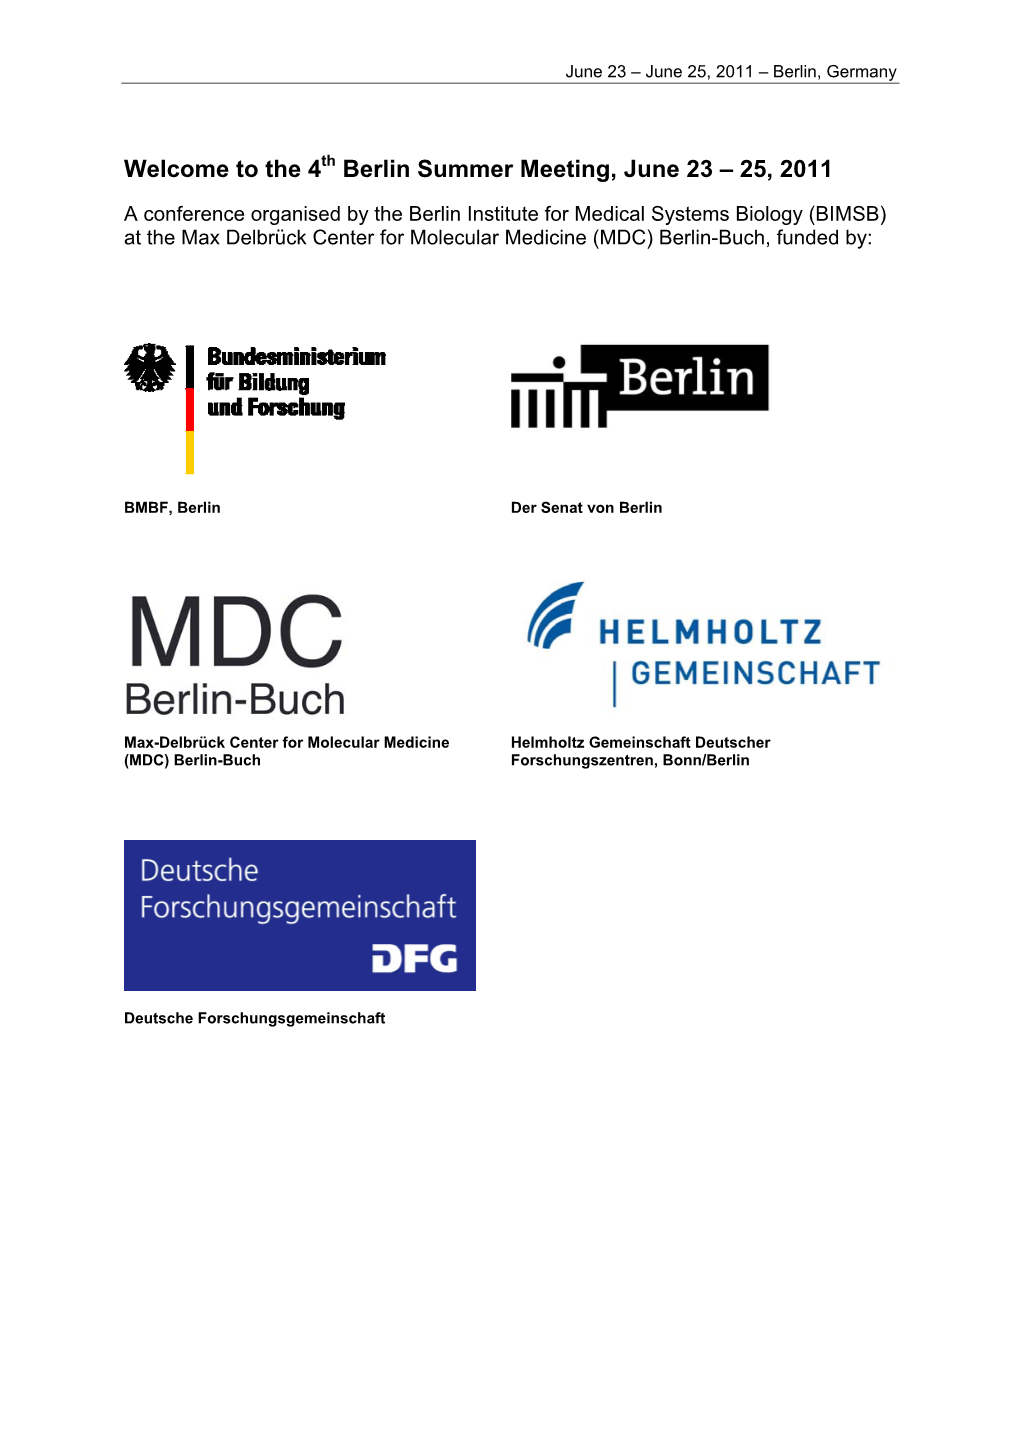 The 4 Berlin Summer Meeting, June 23